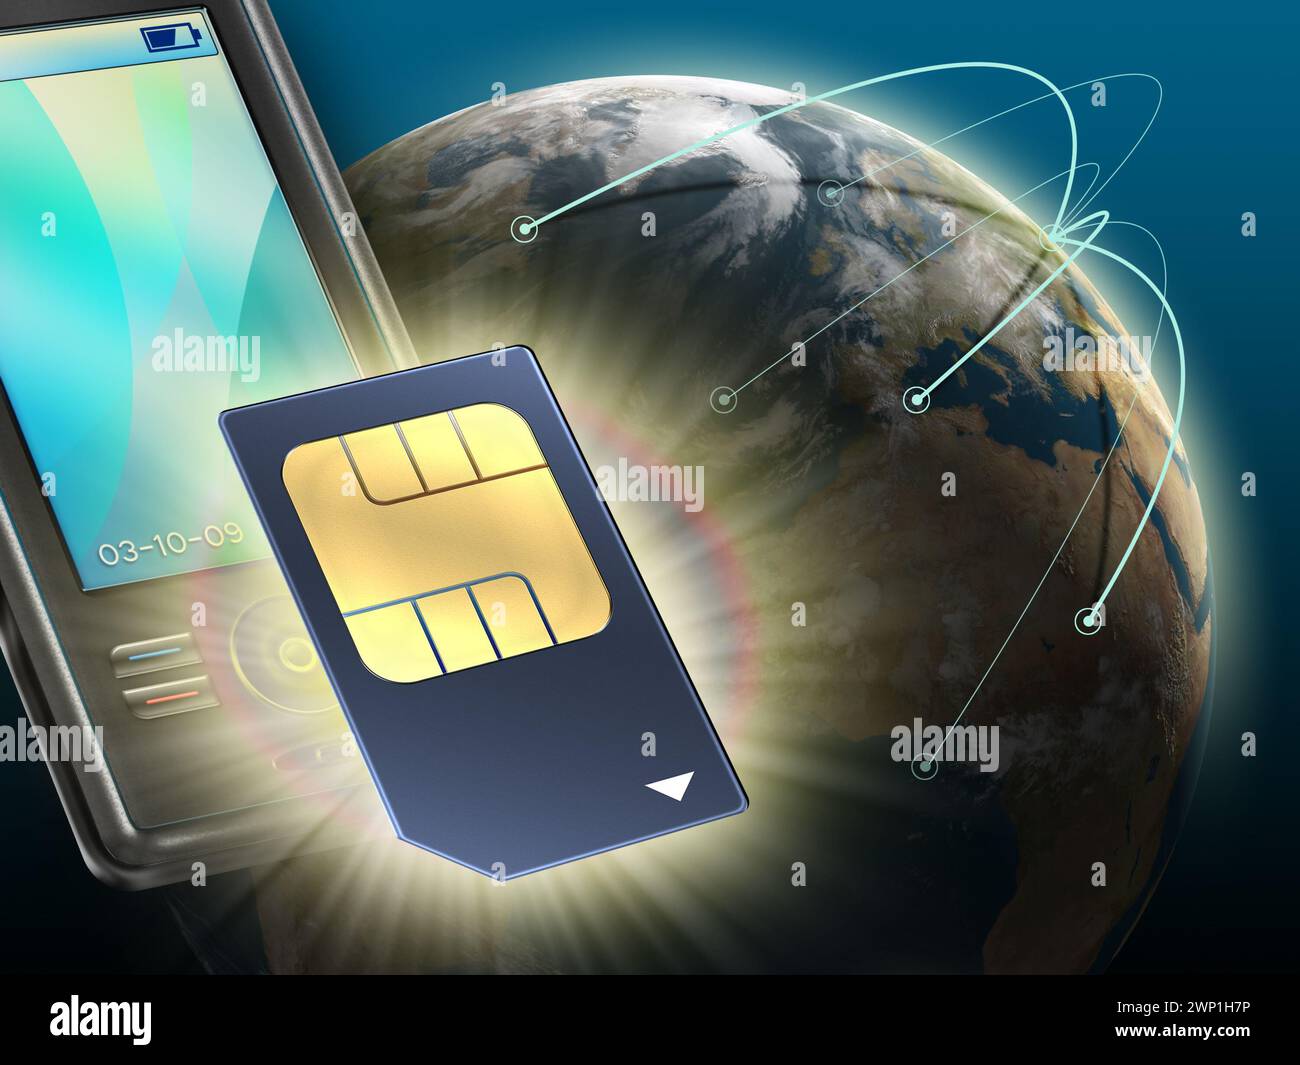 Technologically advanced sim card for mobile communication. Digital illustration. Stock Photo